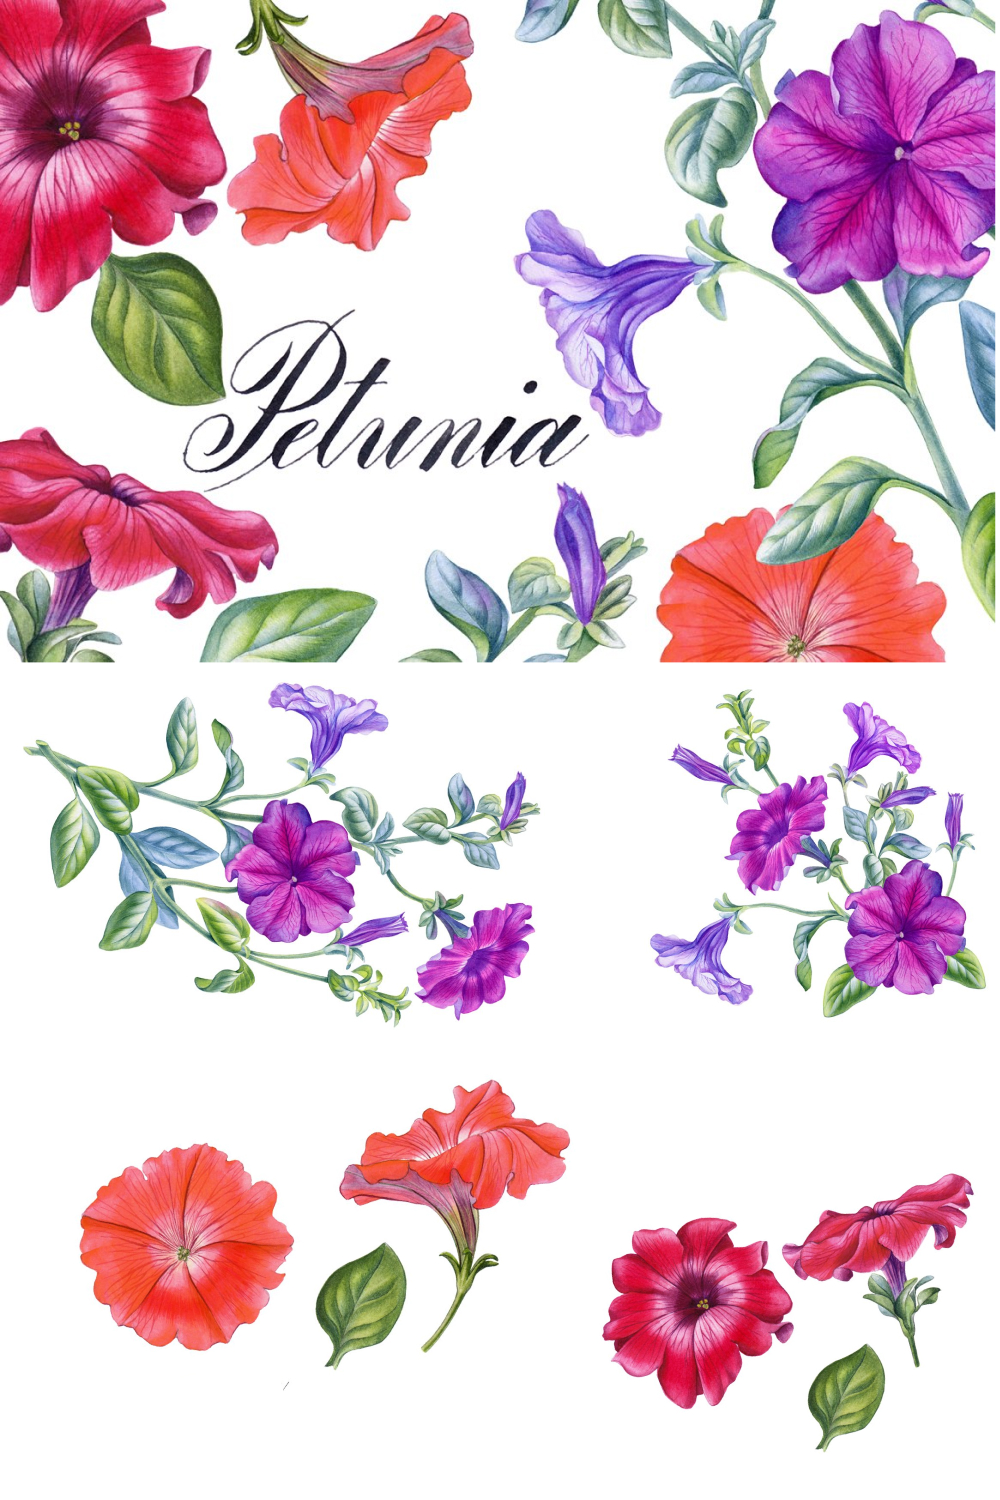 Petunia print of pinterest.